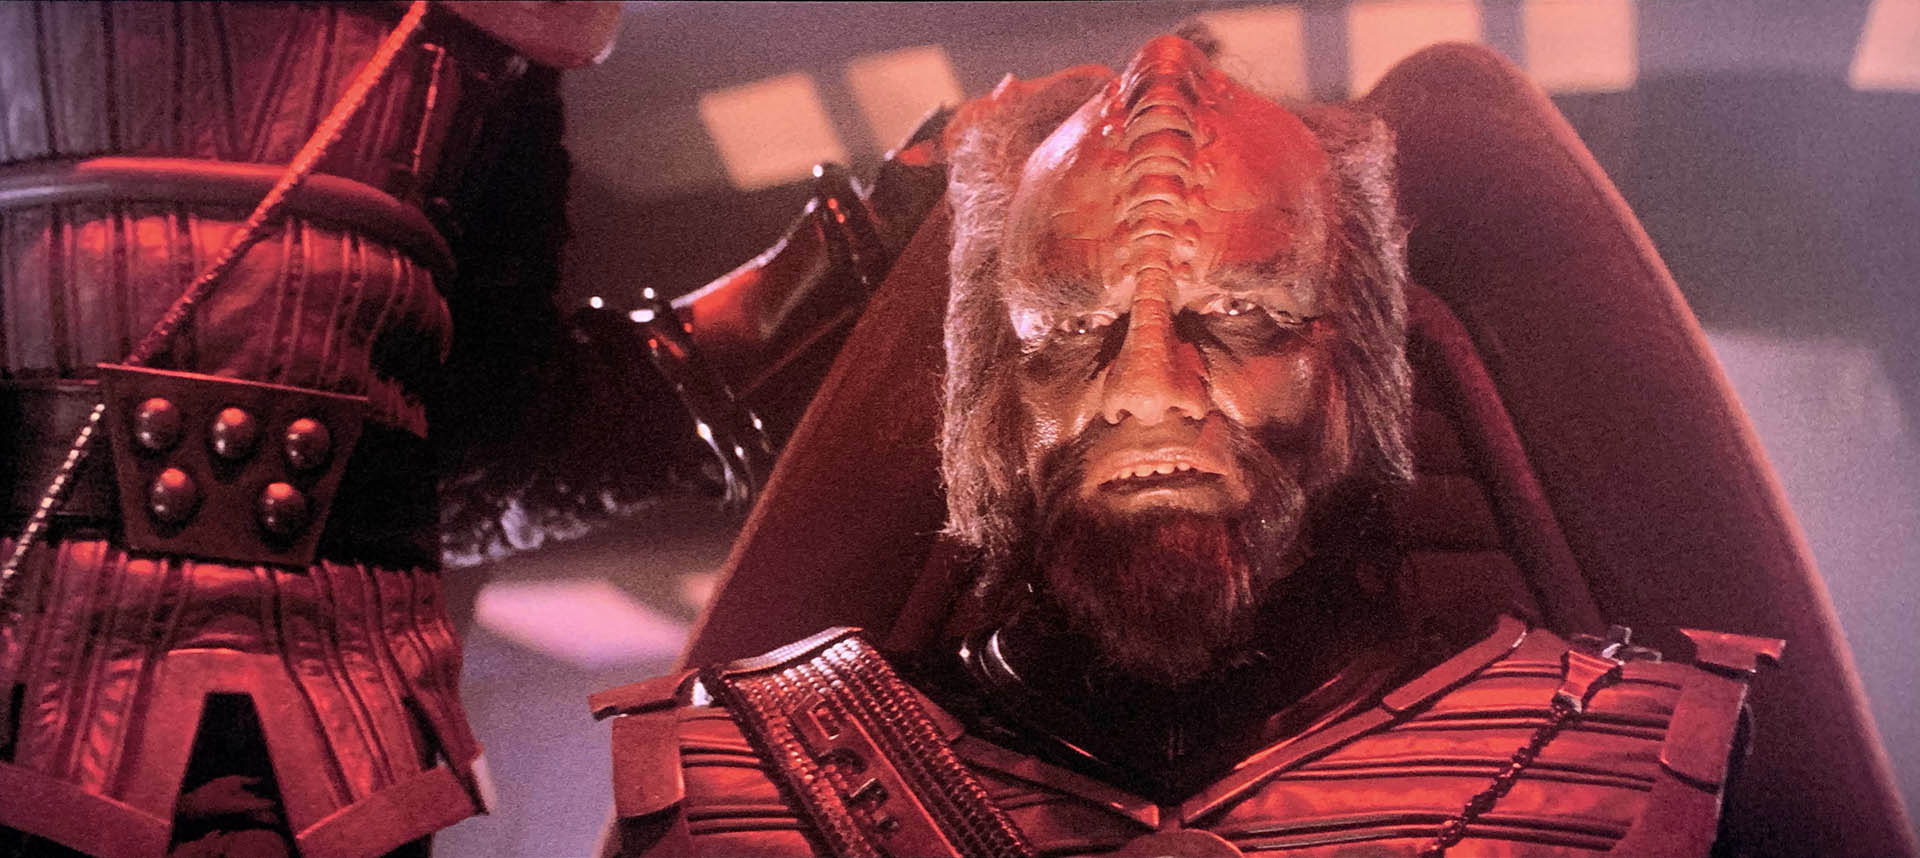 star trek the motion picture klingon-still 4k blu-ray